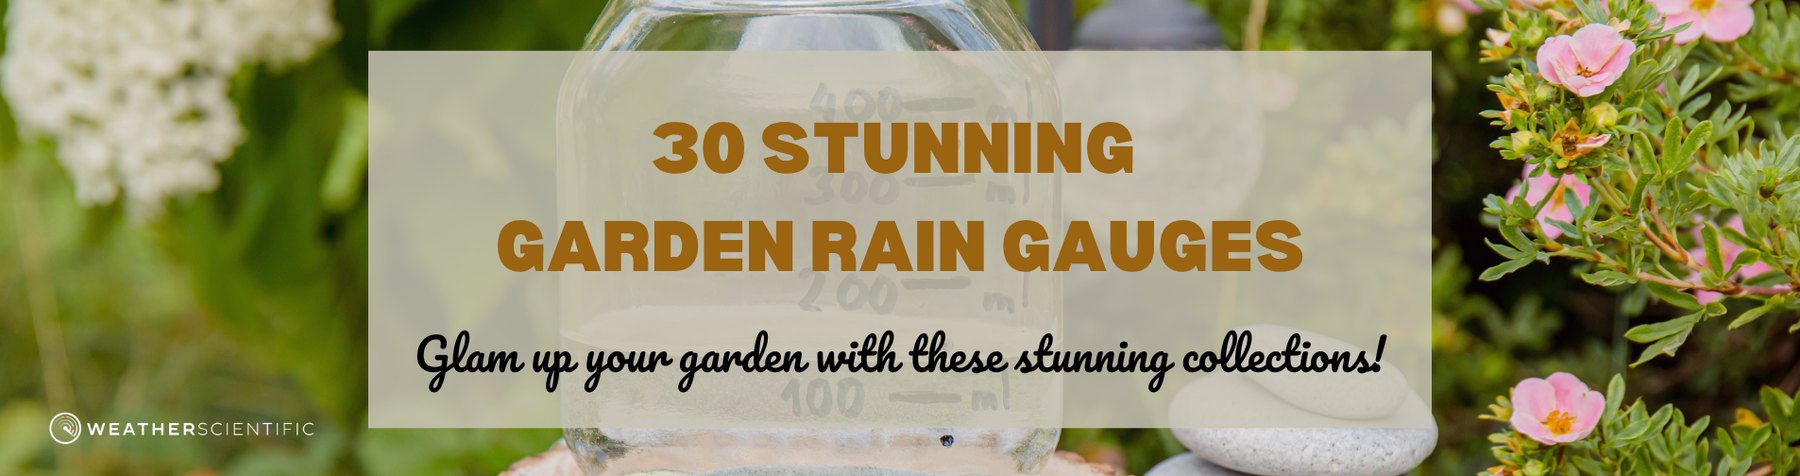 30 Stunning Garden Rain Gauges